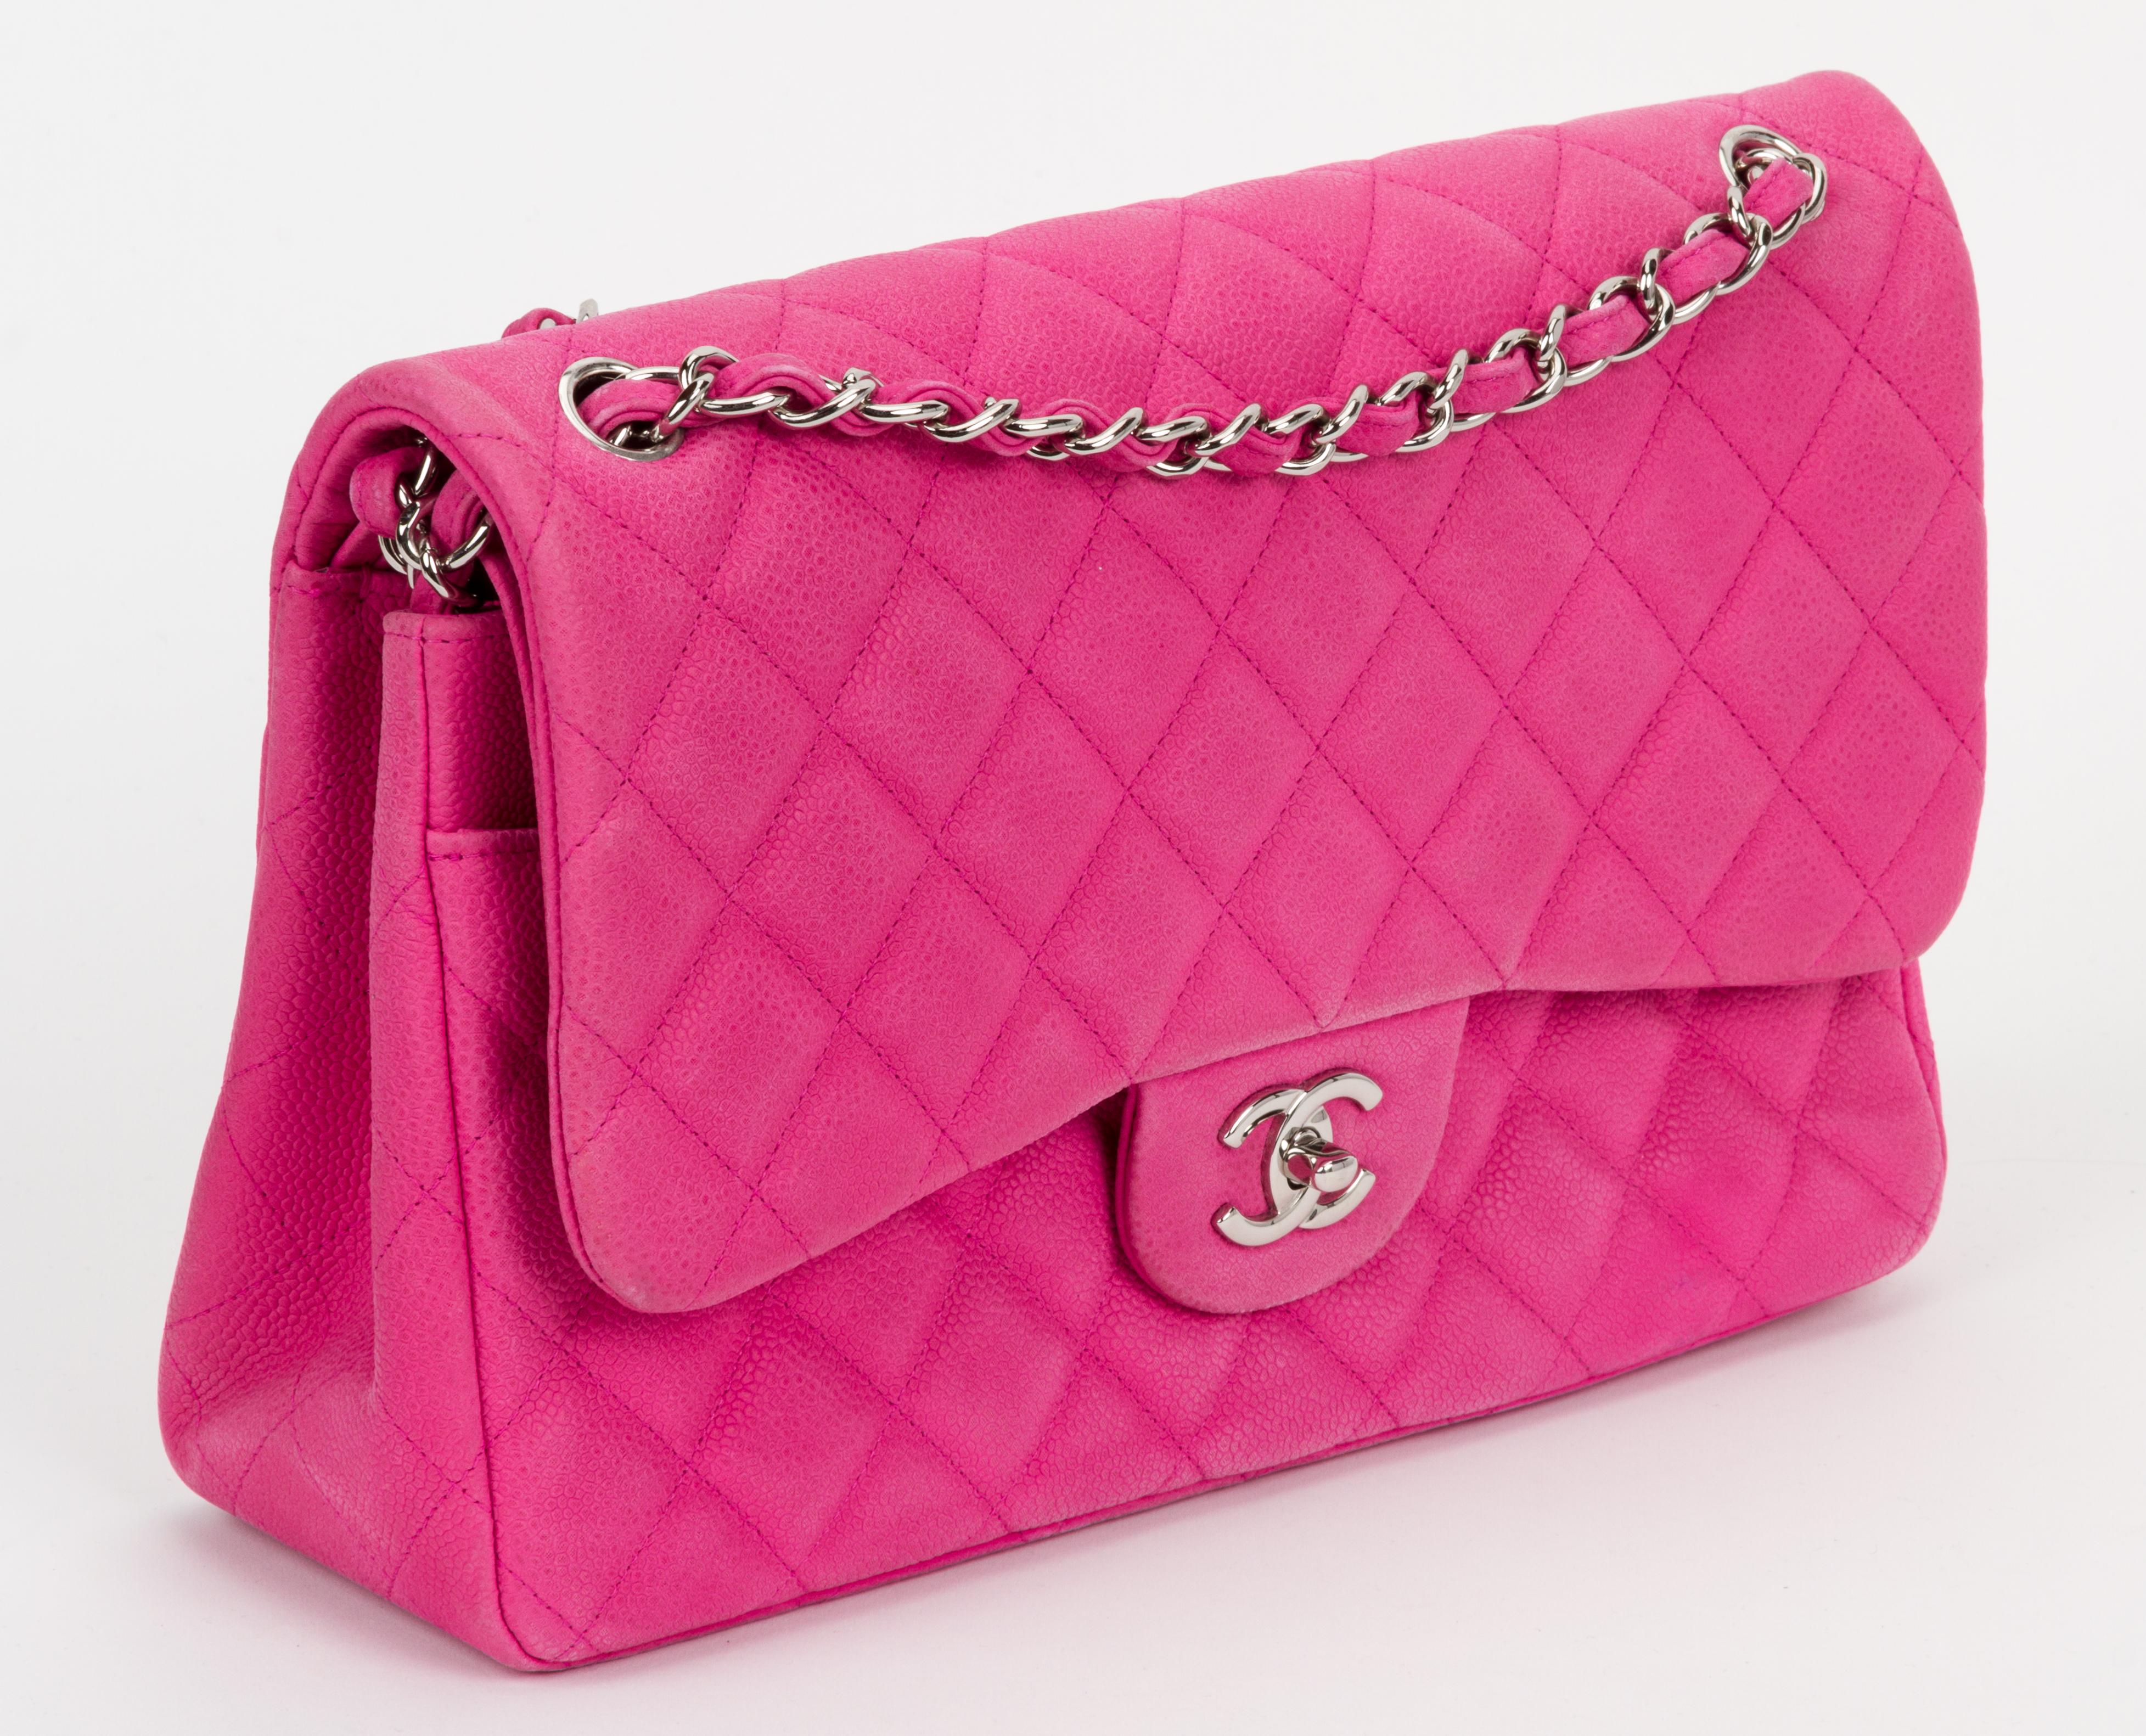 Hot Pink Chanel Bag - For Sale on 1stDibs